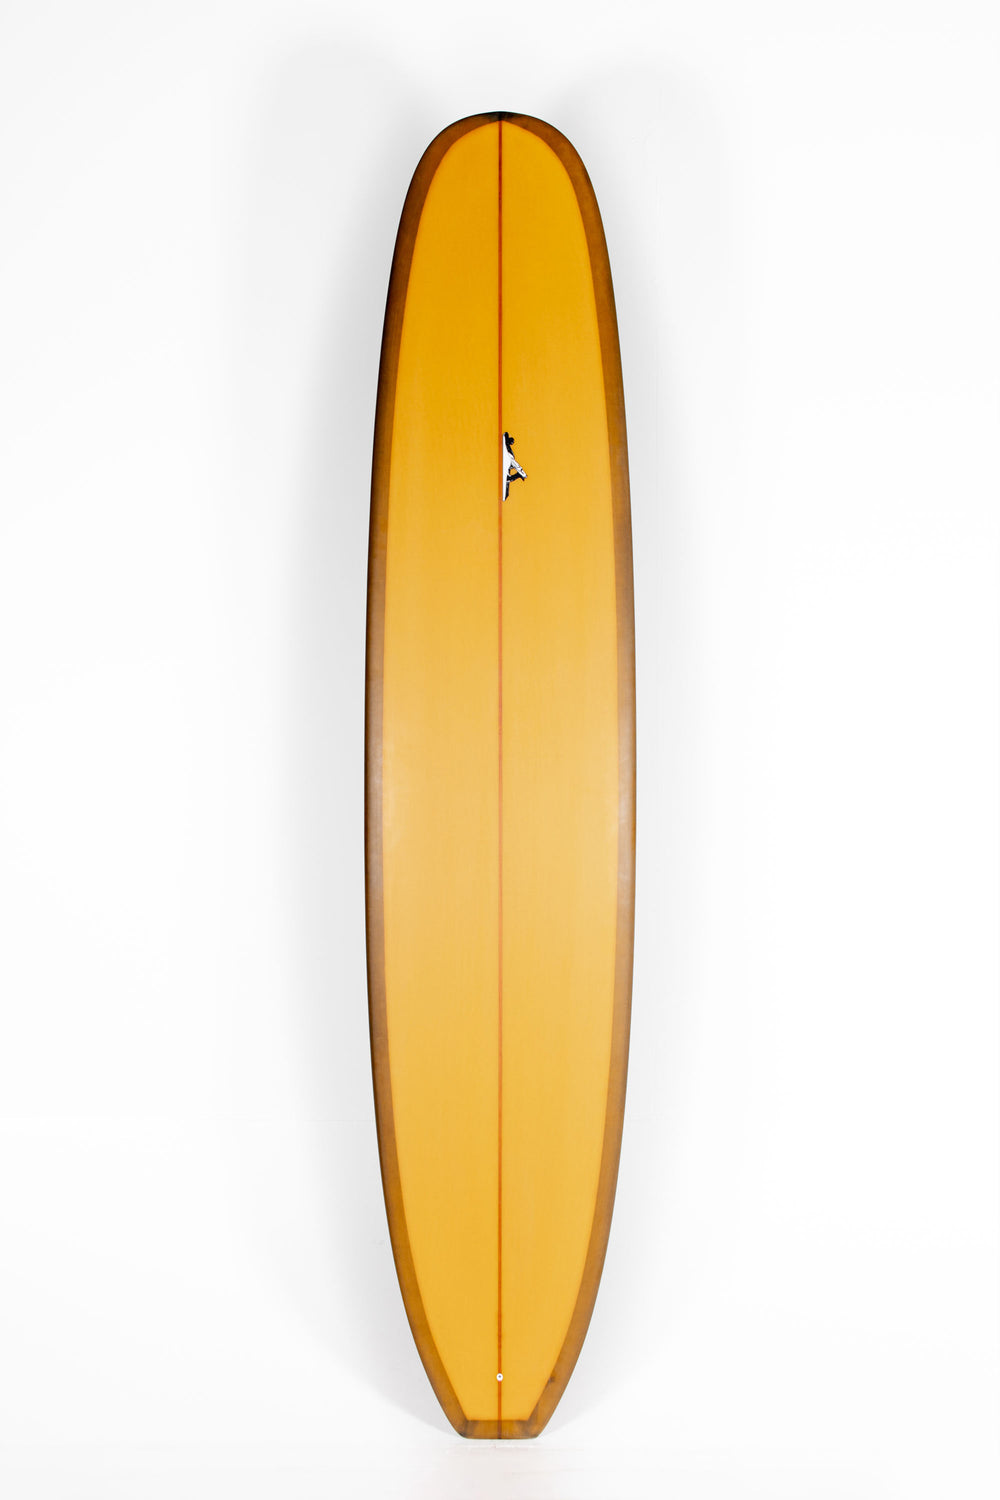 Pukas Surf Shop - Thomas Surfboards - STEP DECK - 9'1